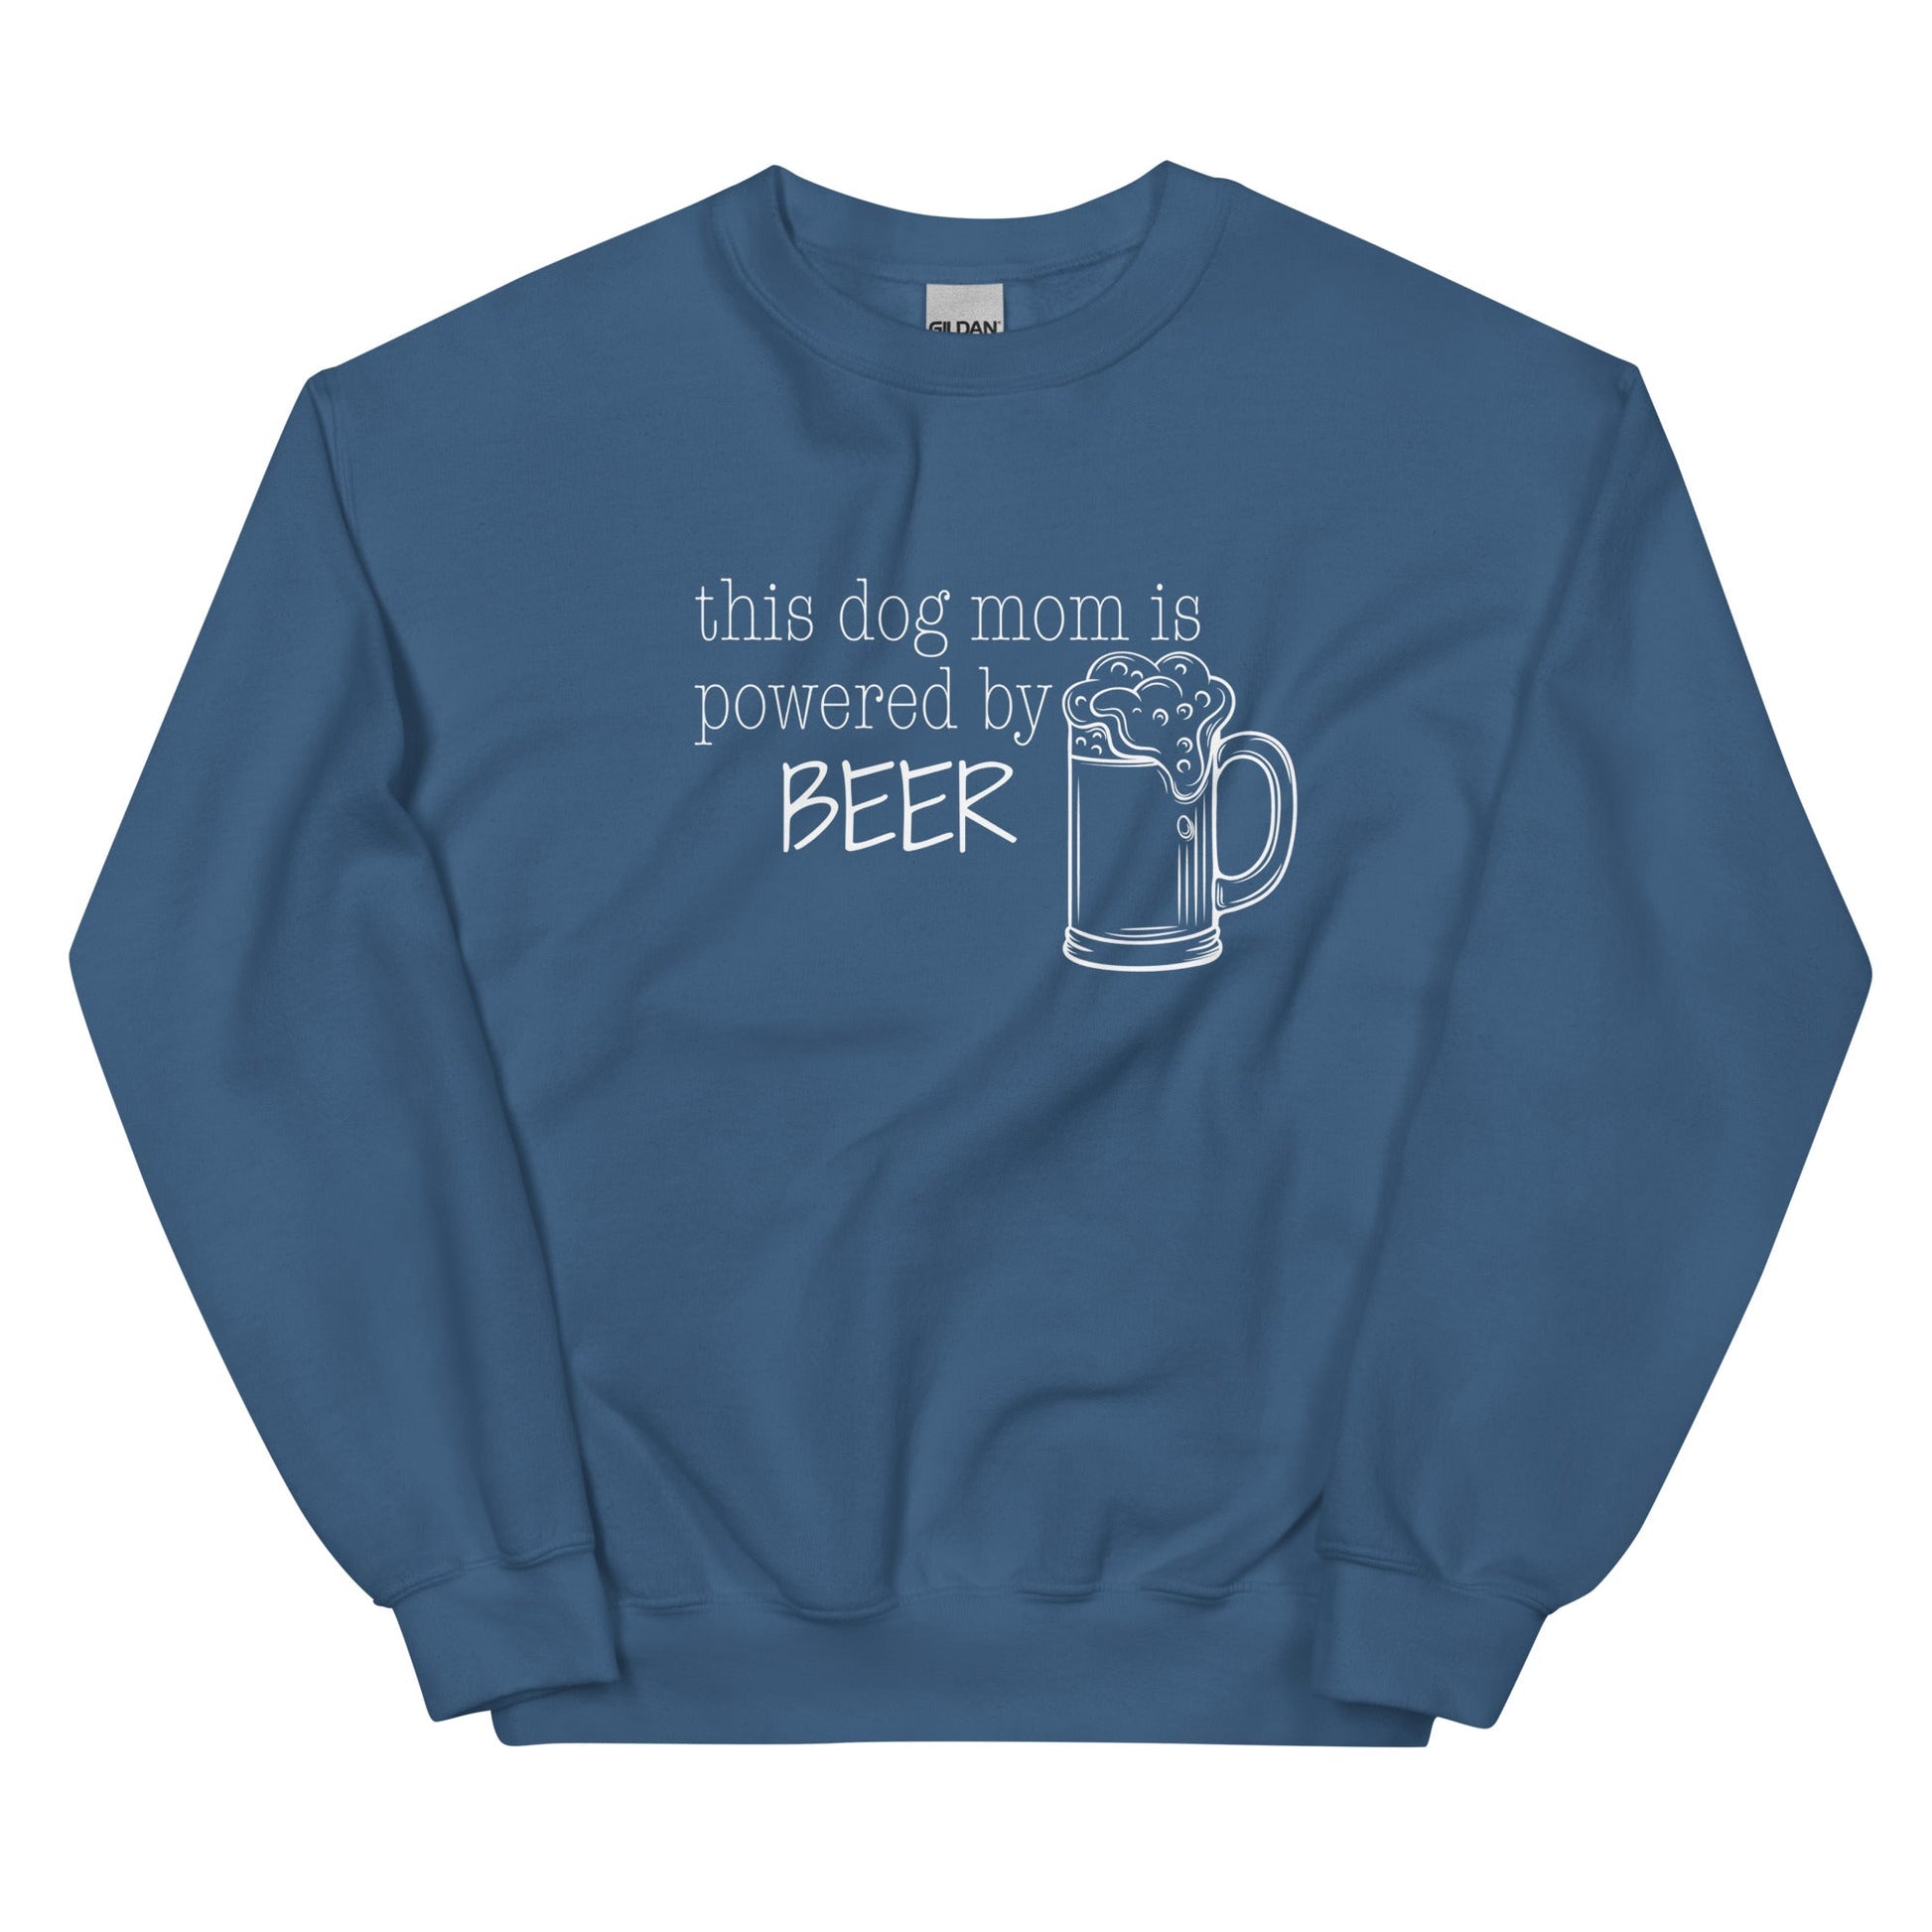 Powered by Beer Sweatshirt - Indigo Blue / S